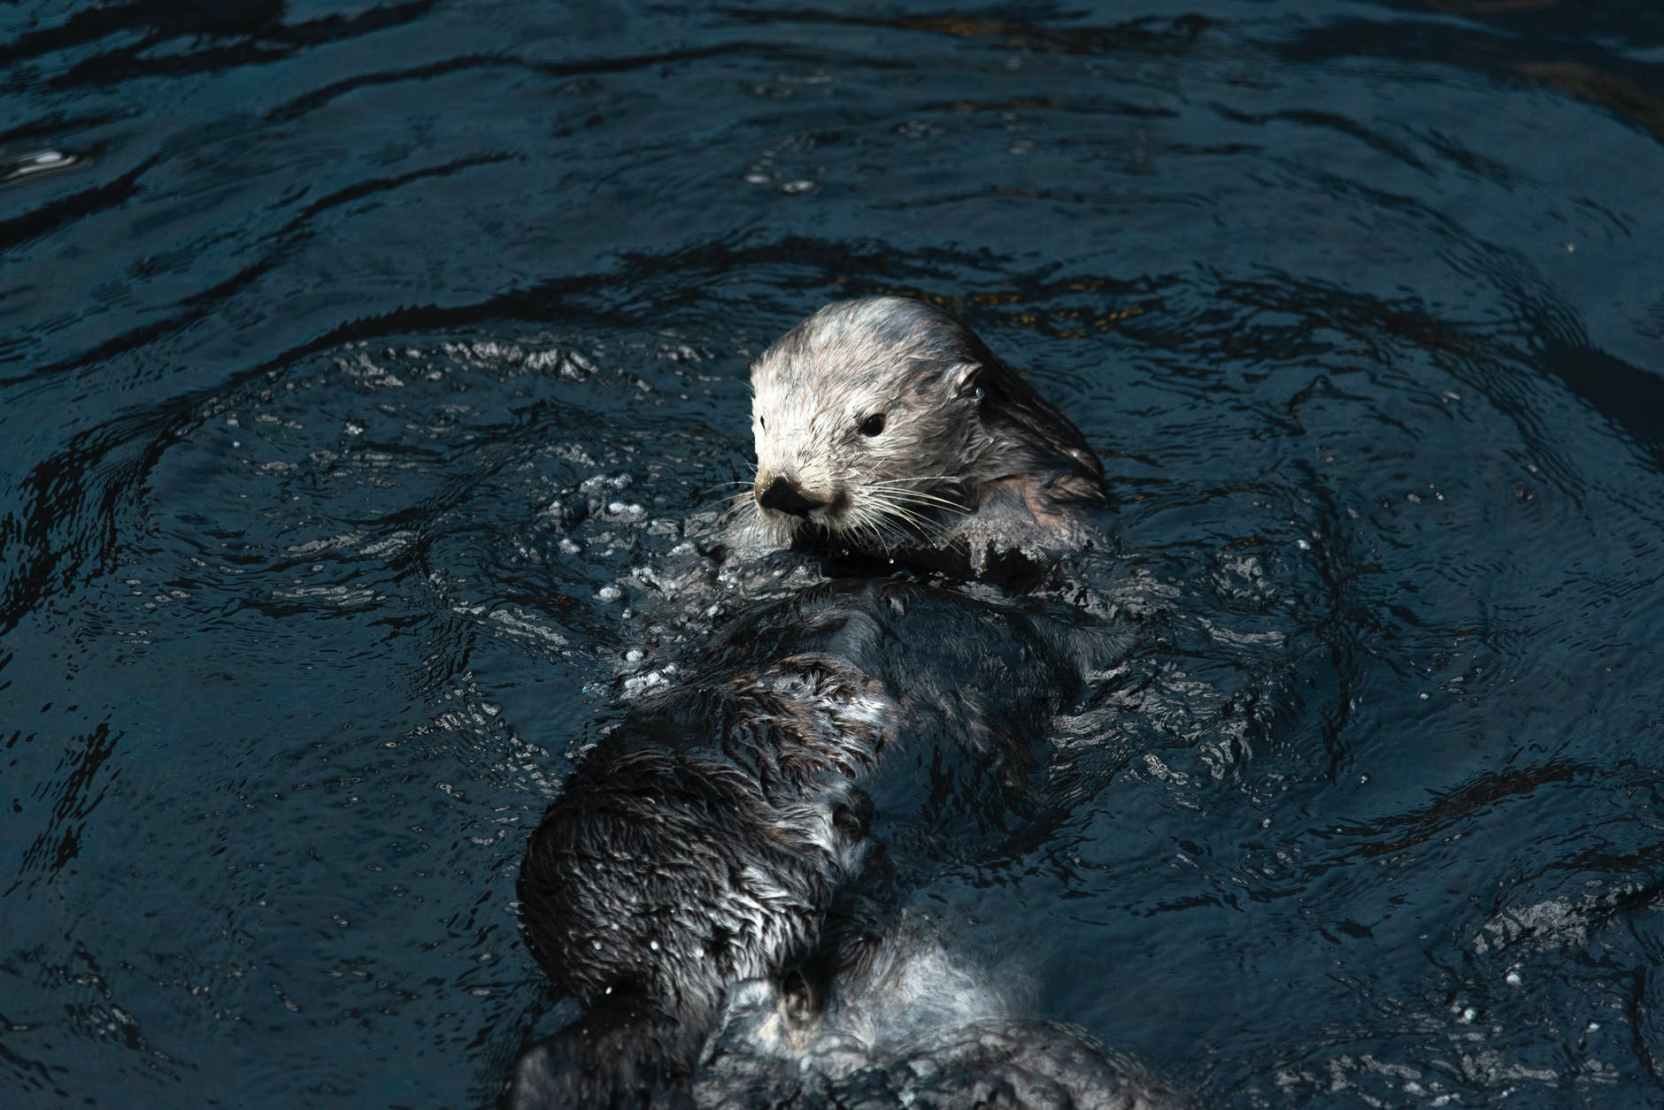 sea otter in water grooming itself